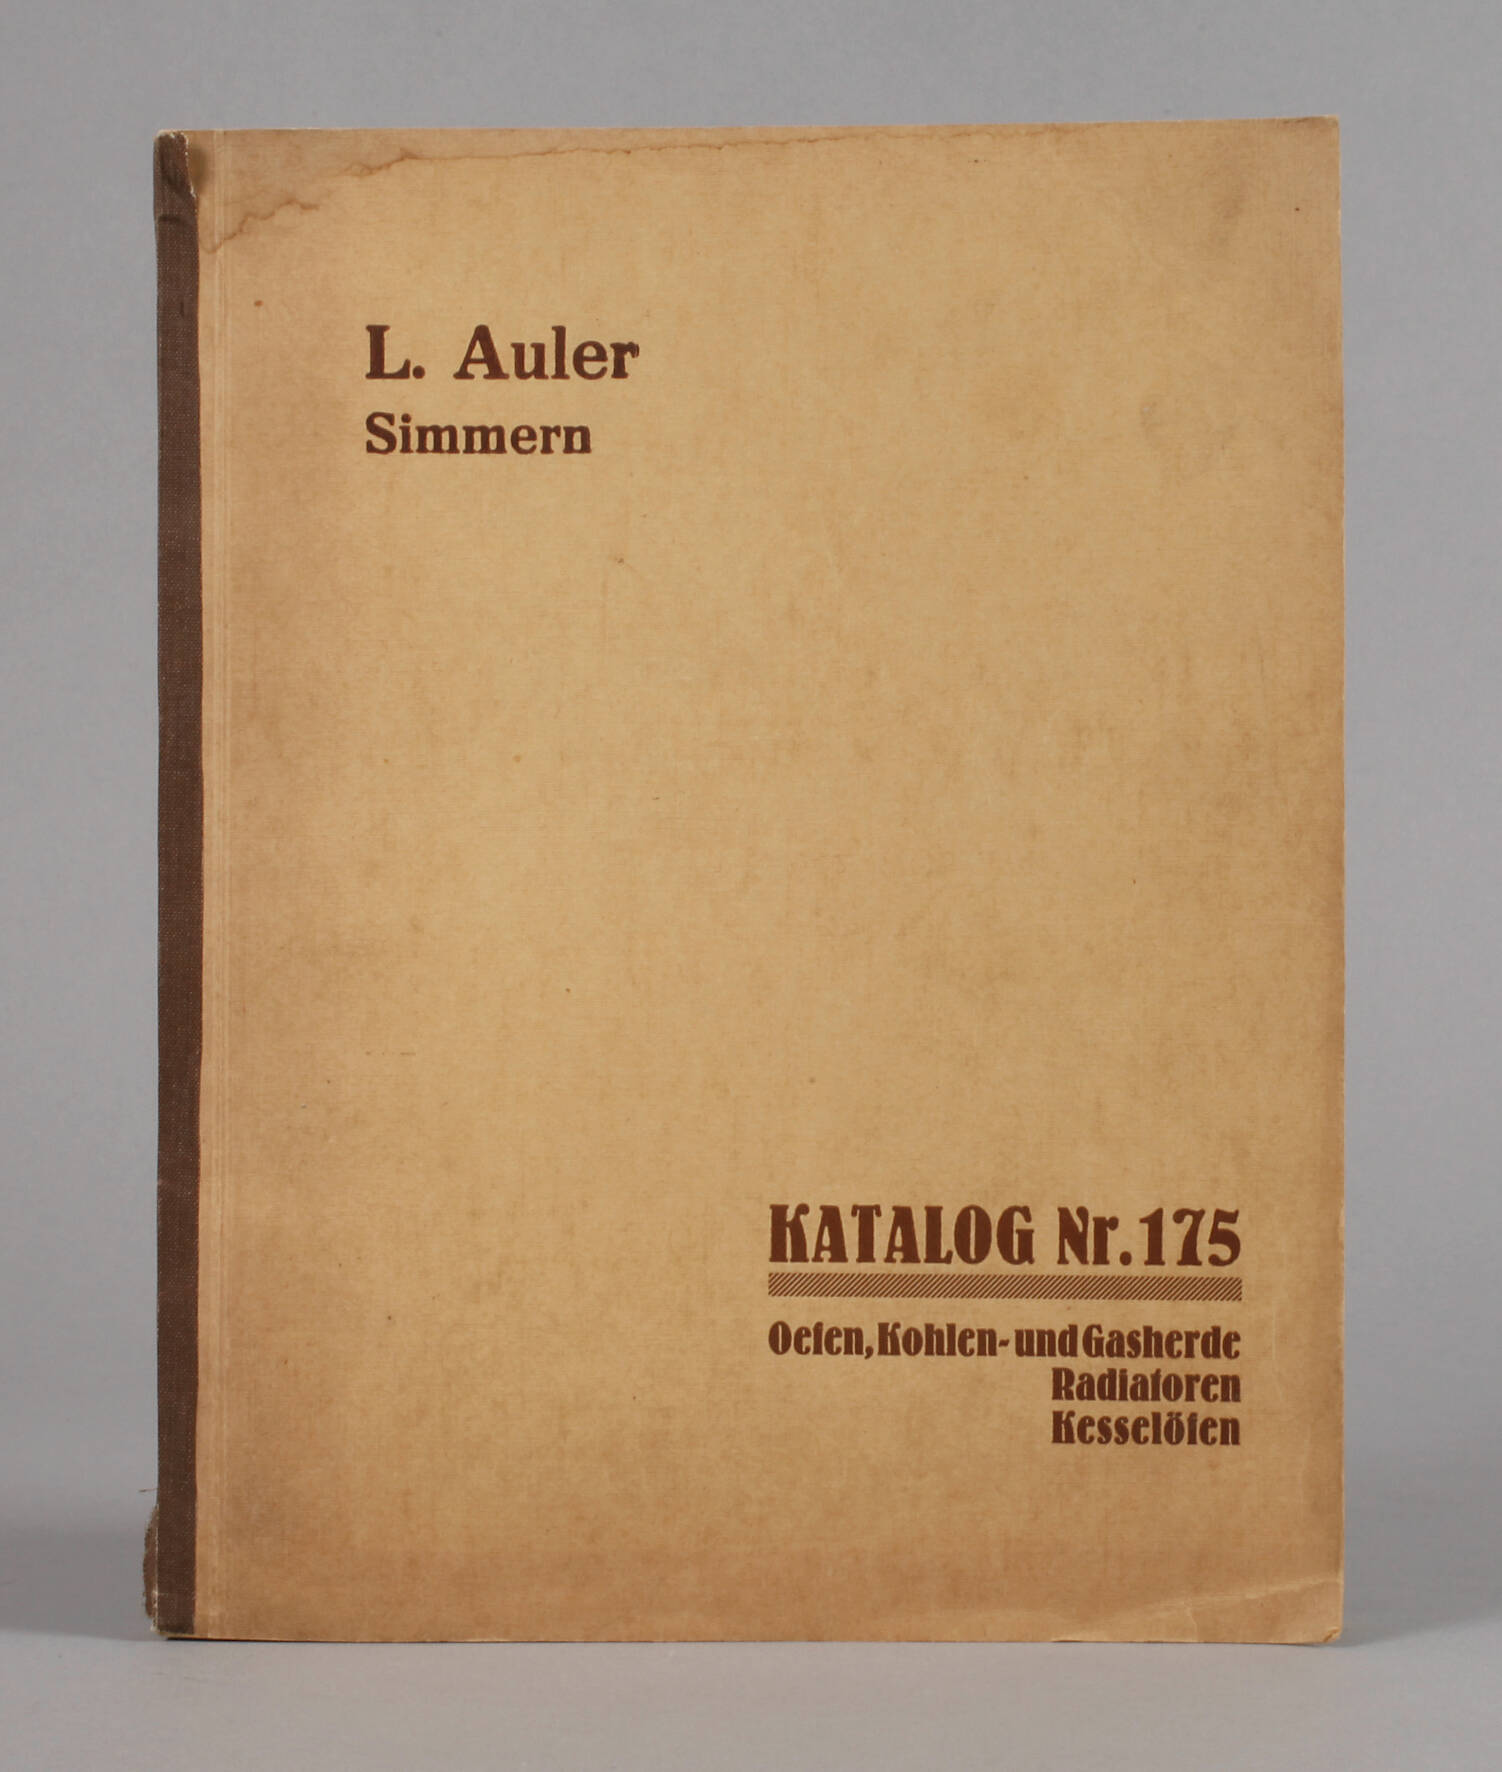 L. Auler Simmern, Katalog Nr. 175